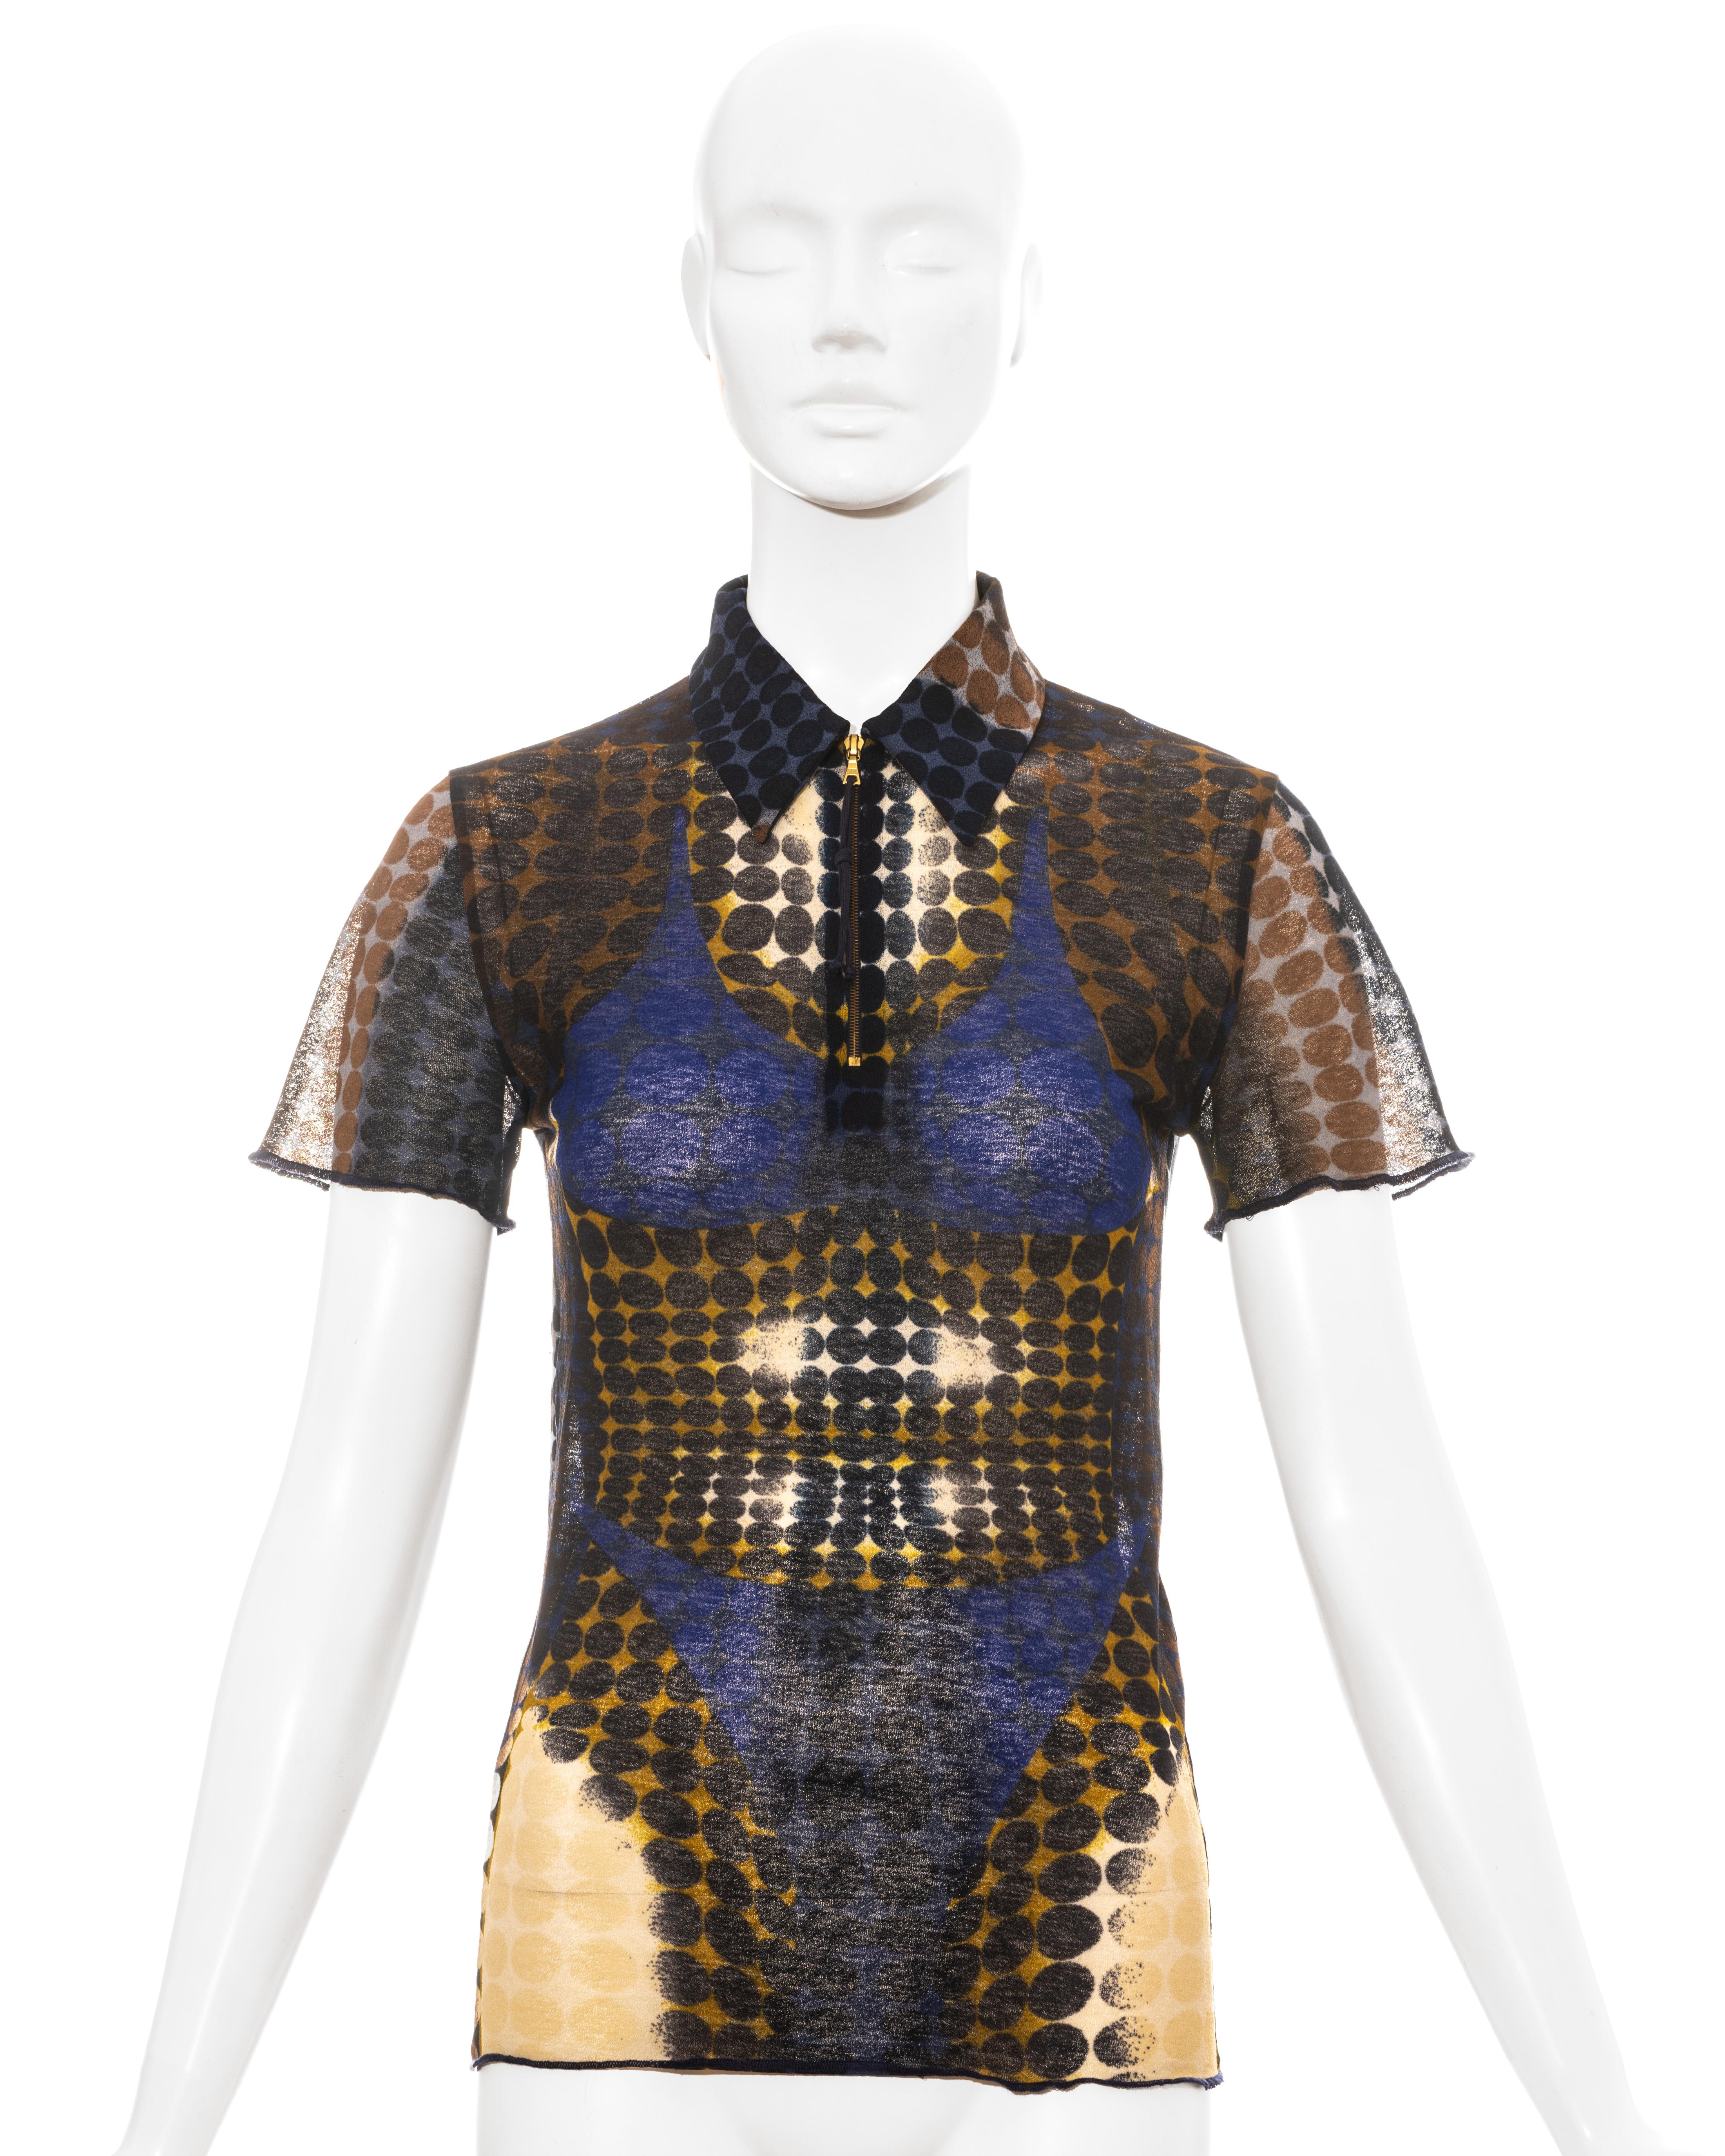 Jean Paul Gaultier blue cyber dots mesh polo shirt

Fall-Winter 1995